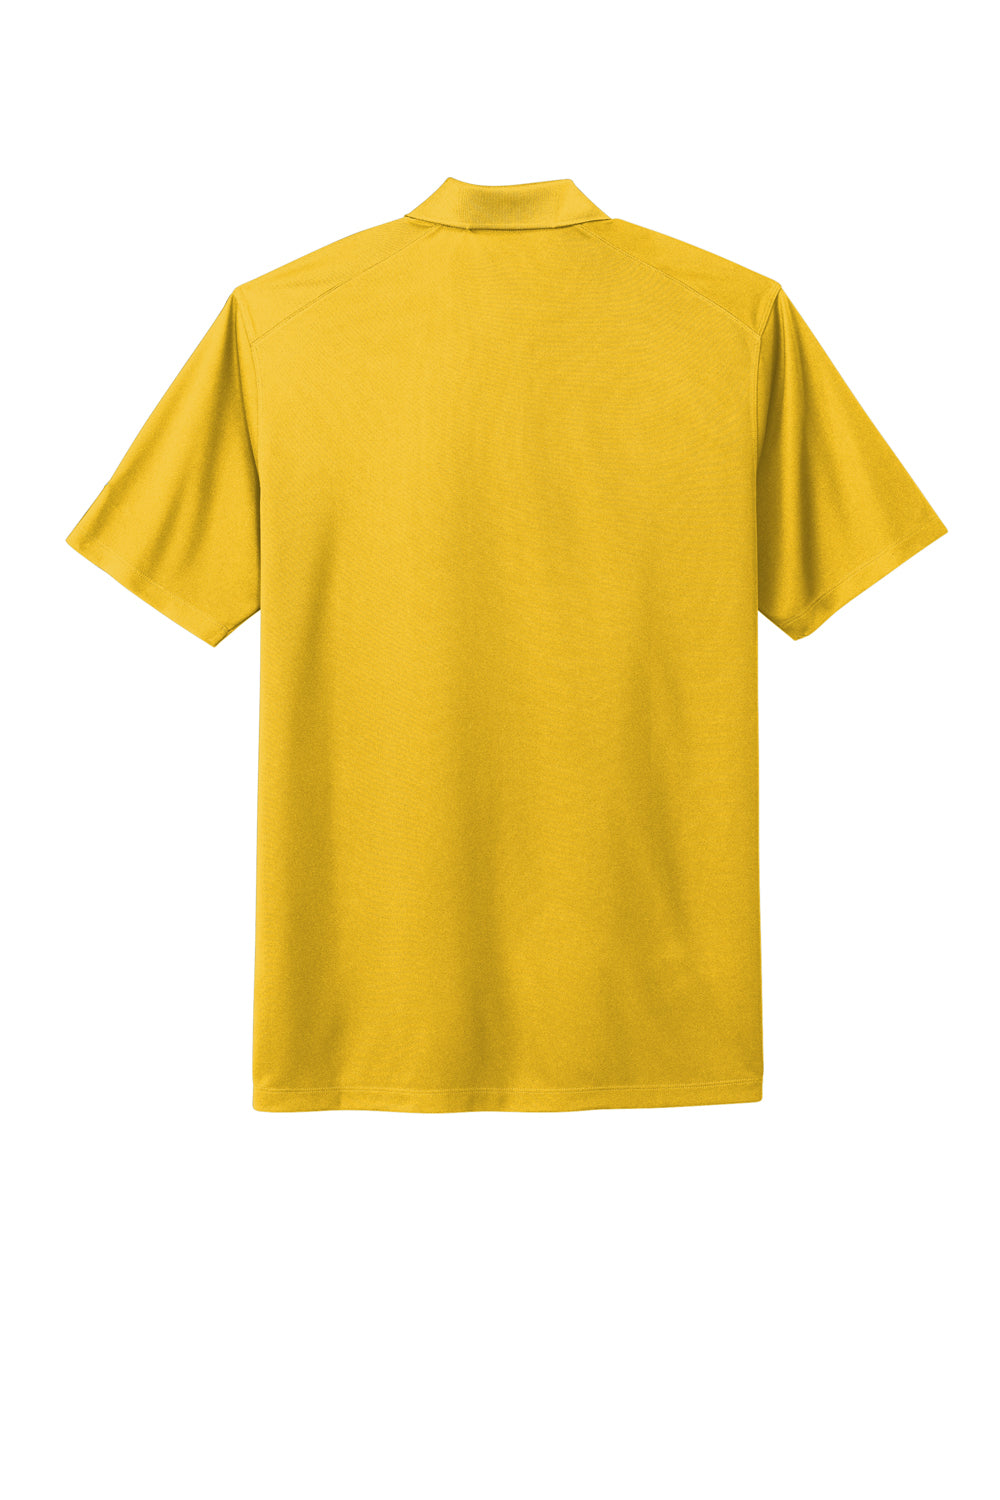 Nike NKDC1963 Mens Dri-Fit Moisture Wicking Micro Pique 2.0 Short Sleeve Polo Shirt Varsity Maize Yellow Flat Back